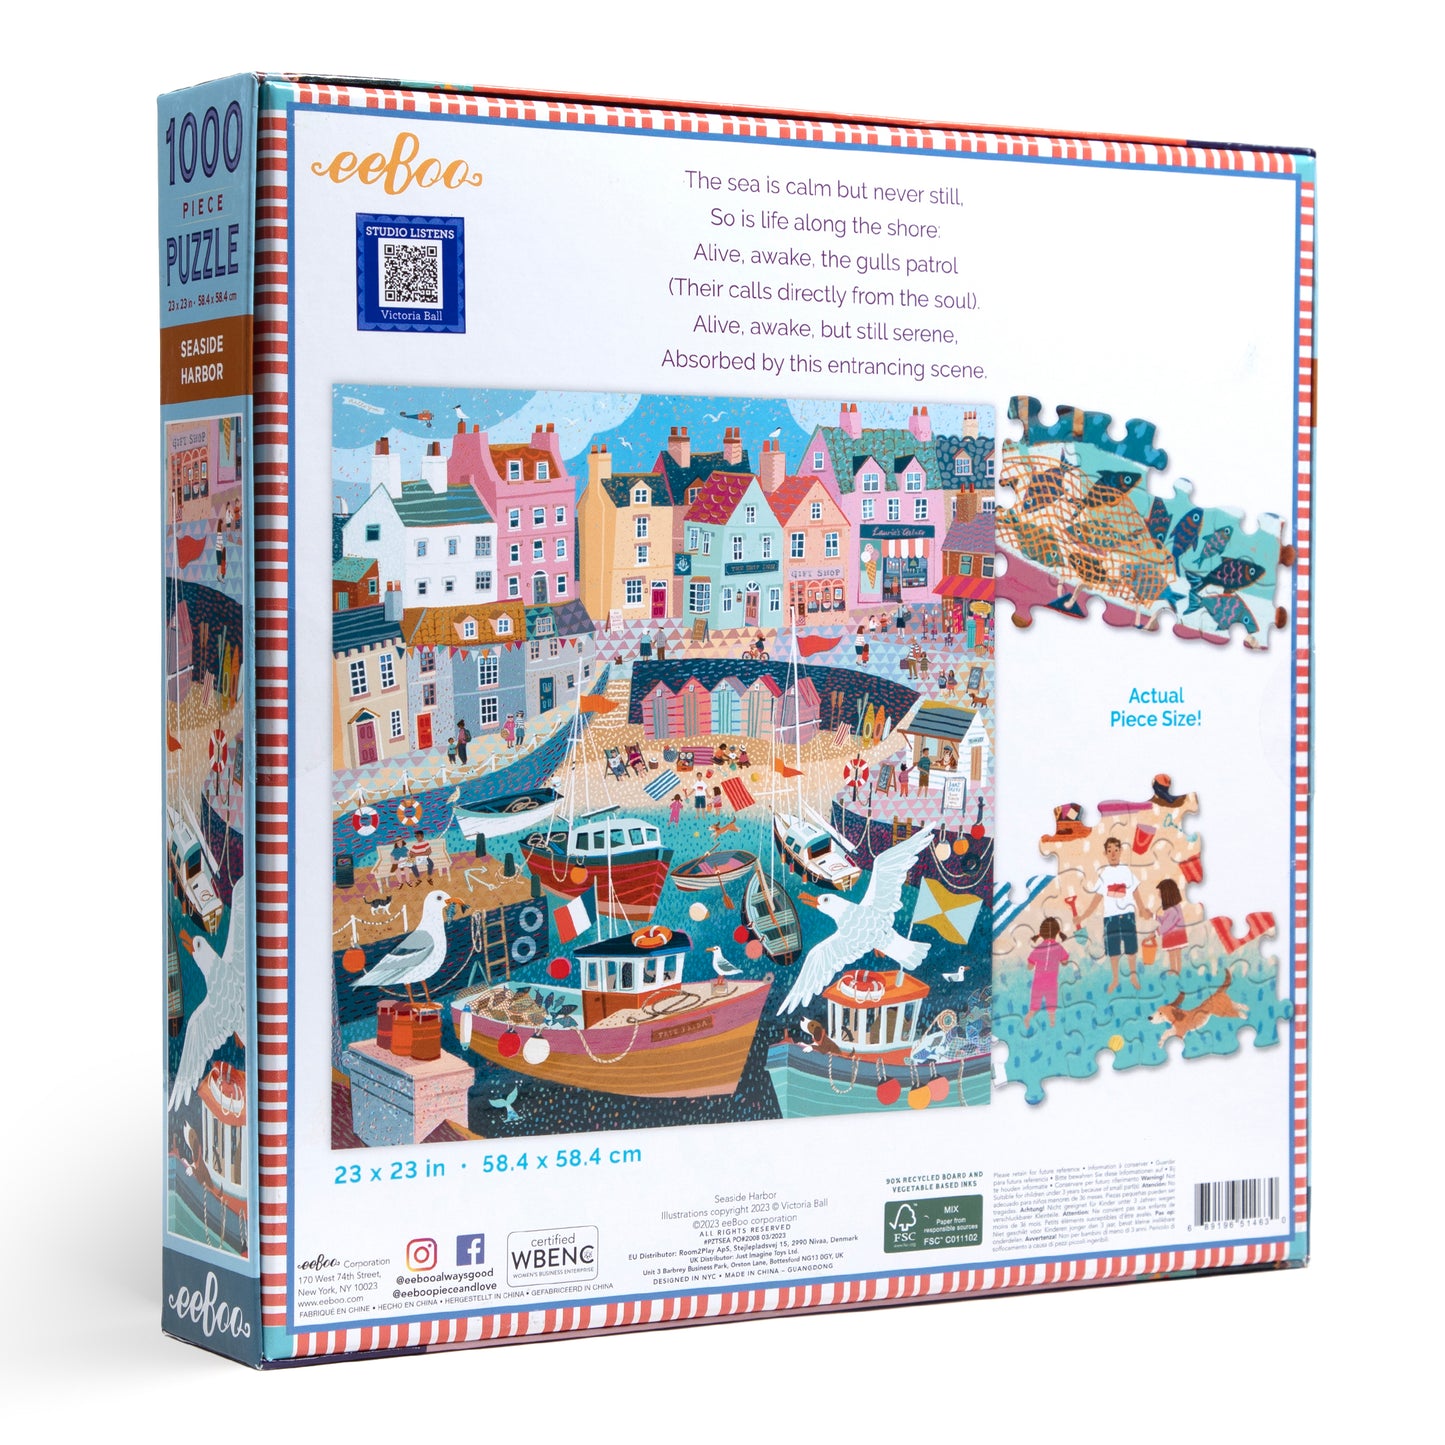 Seaside Boat Harbor Village 1000 Piece Jigsaw Puzzle | eeBoo Piece & Love Unique Gifts for Women